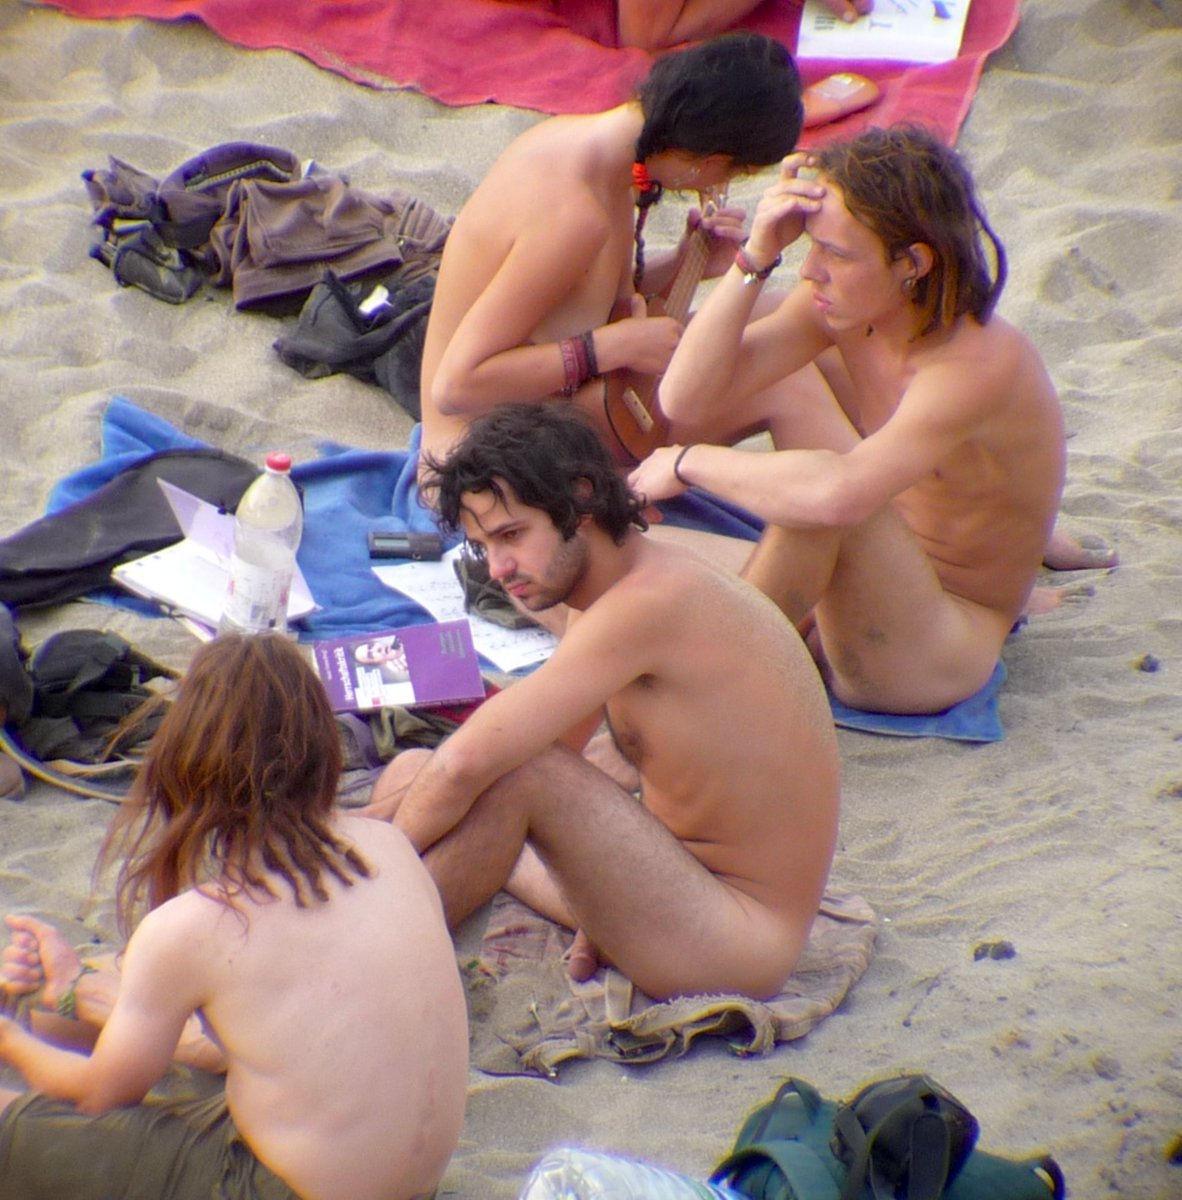 Nudist boys wild outdoors porn guys - 193121248.jpg